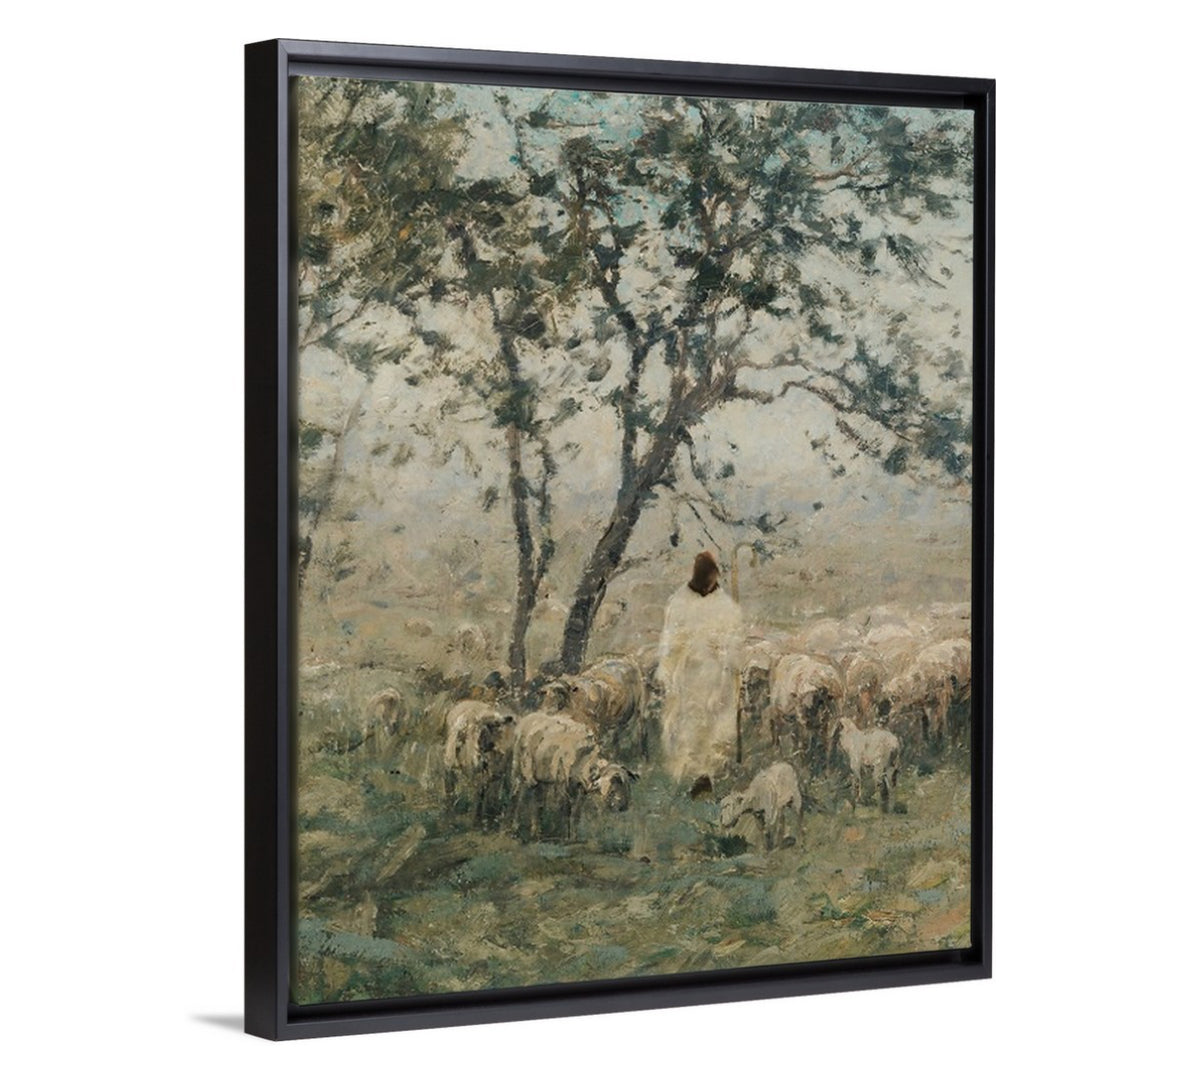 The Shepherd's Call - Canvas